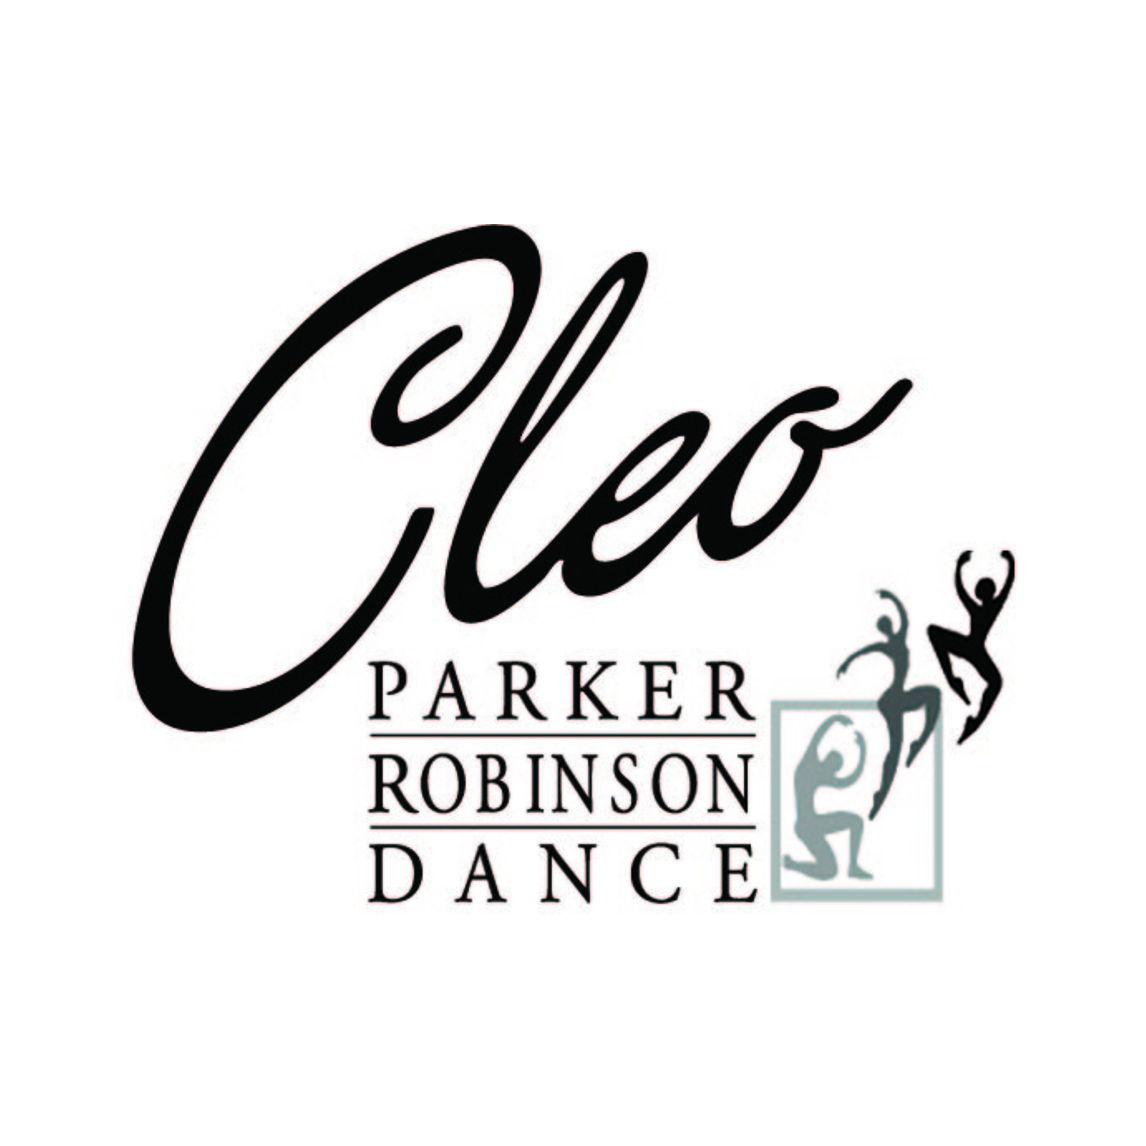 Clea Parker Robinson Dance